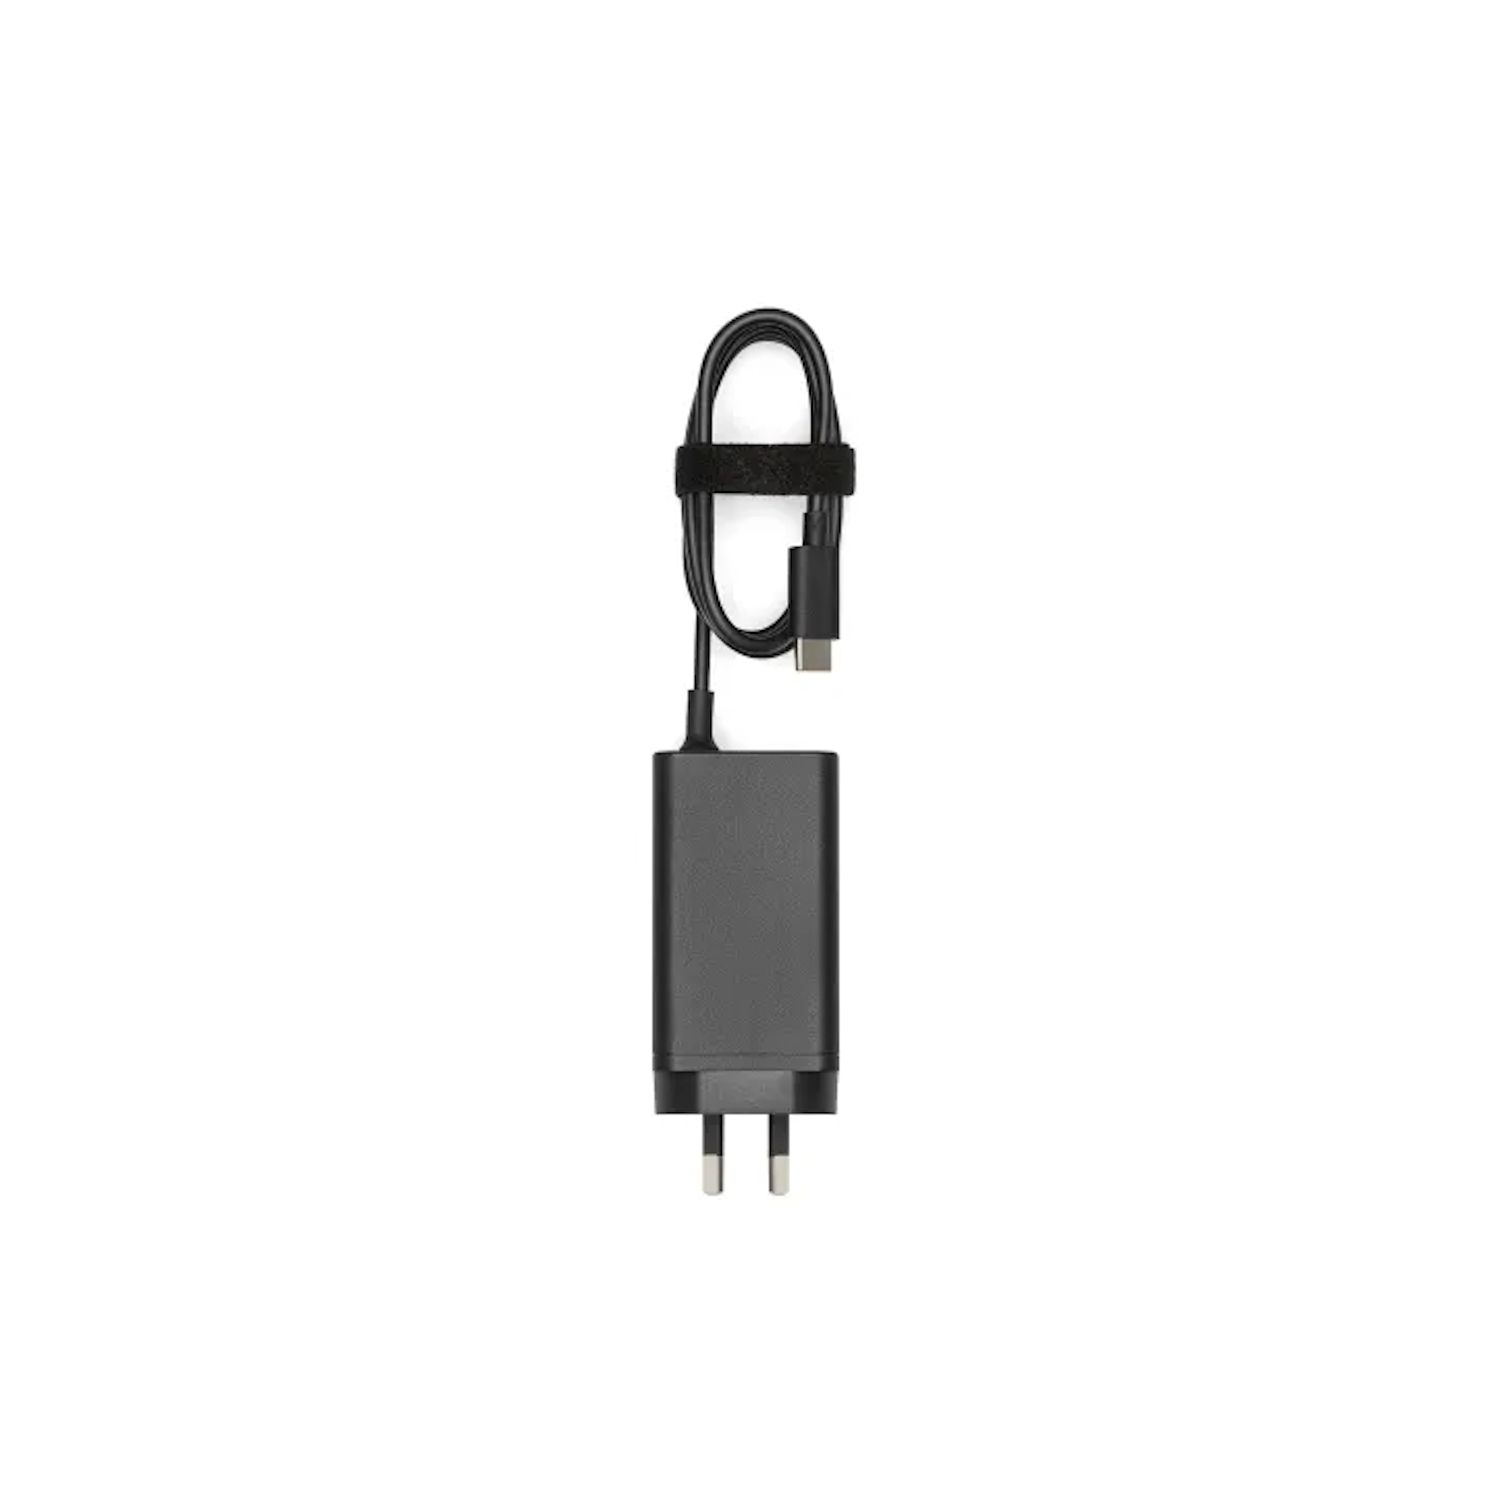 DJI T50 Kit - inclu. Battery + Batt Station + Cable USB Charger + Spreader ***